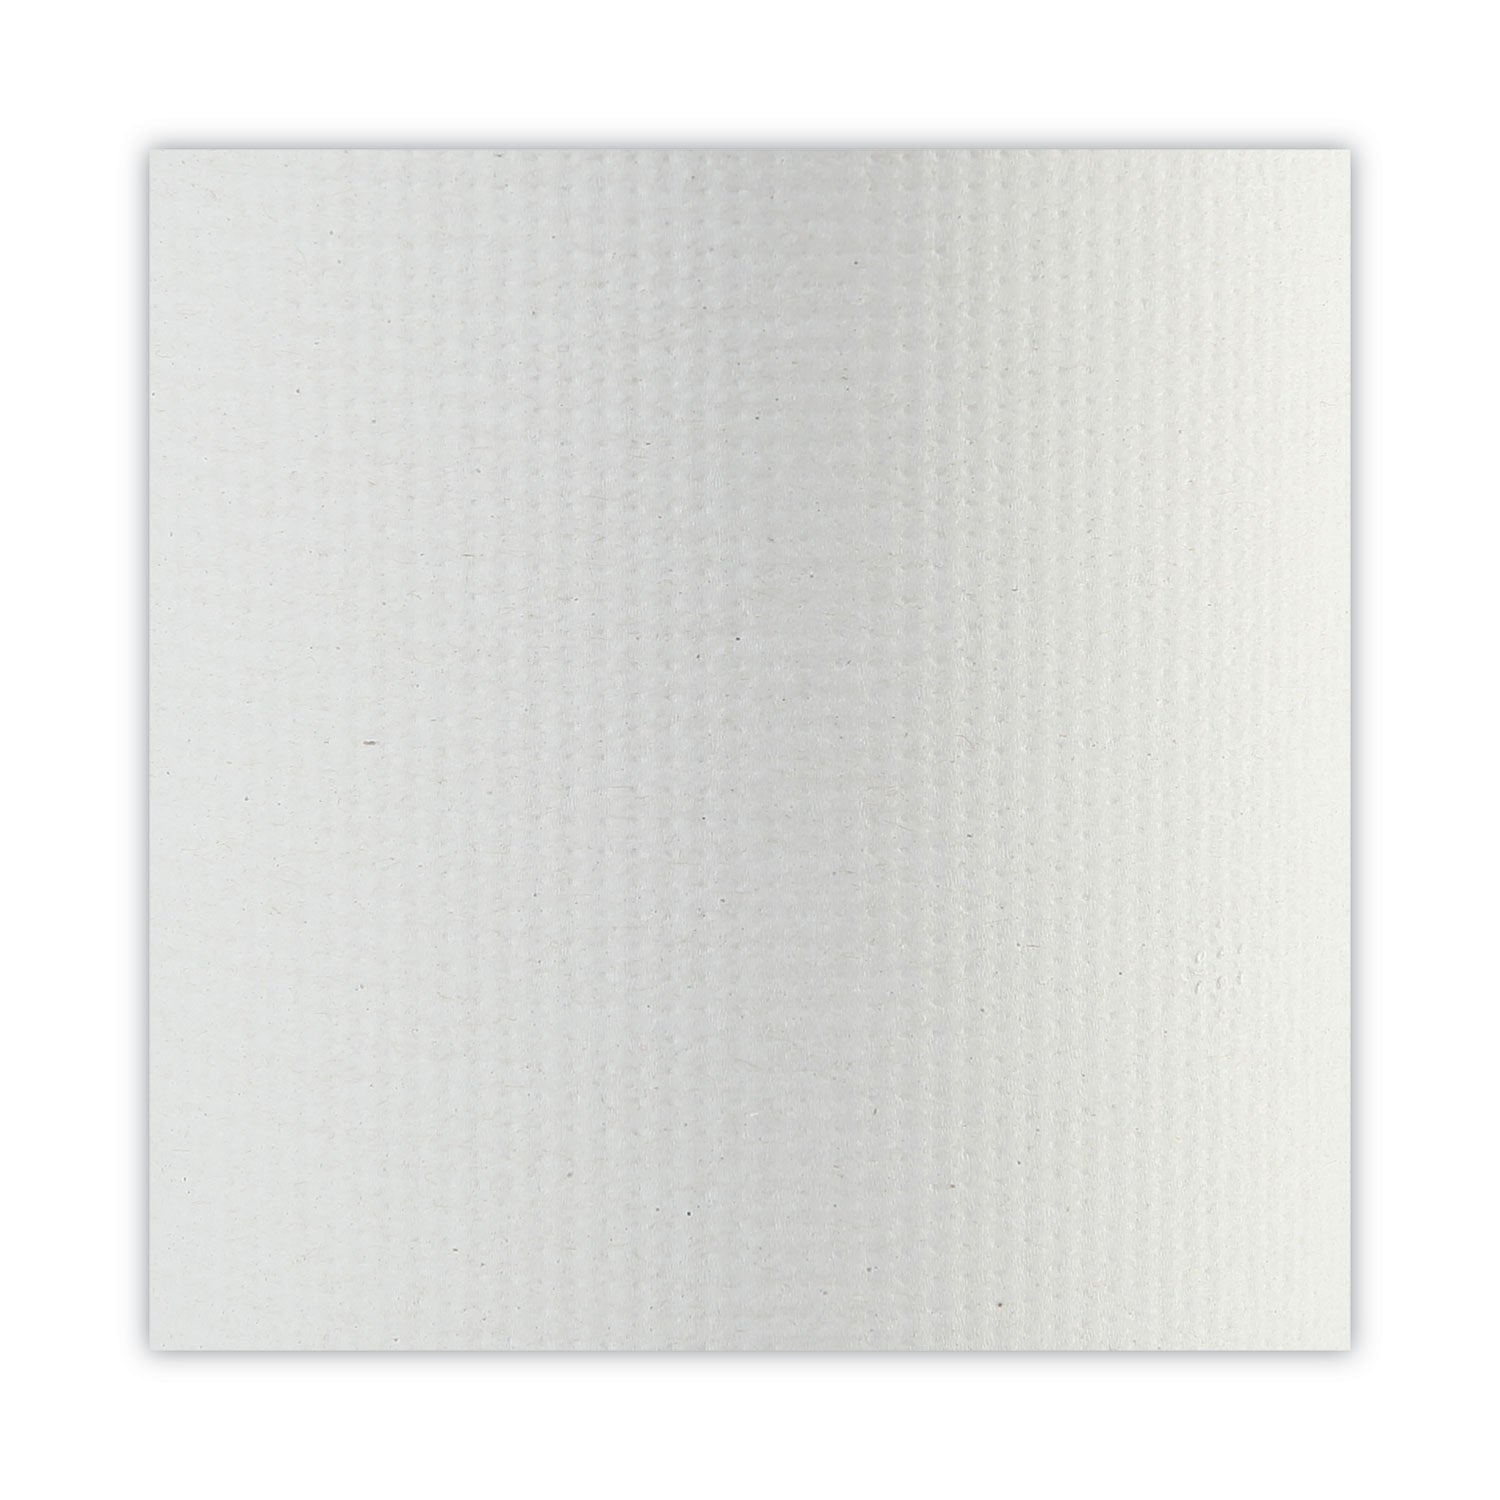 hardwound-paper-towels-1-ply-8-x-600-ft-white-2-core-12-rolls-carton_bwk6261b - 5